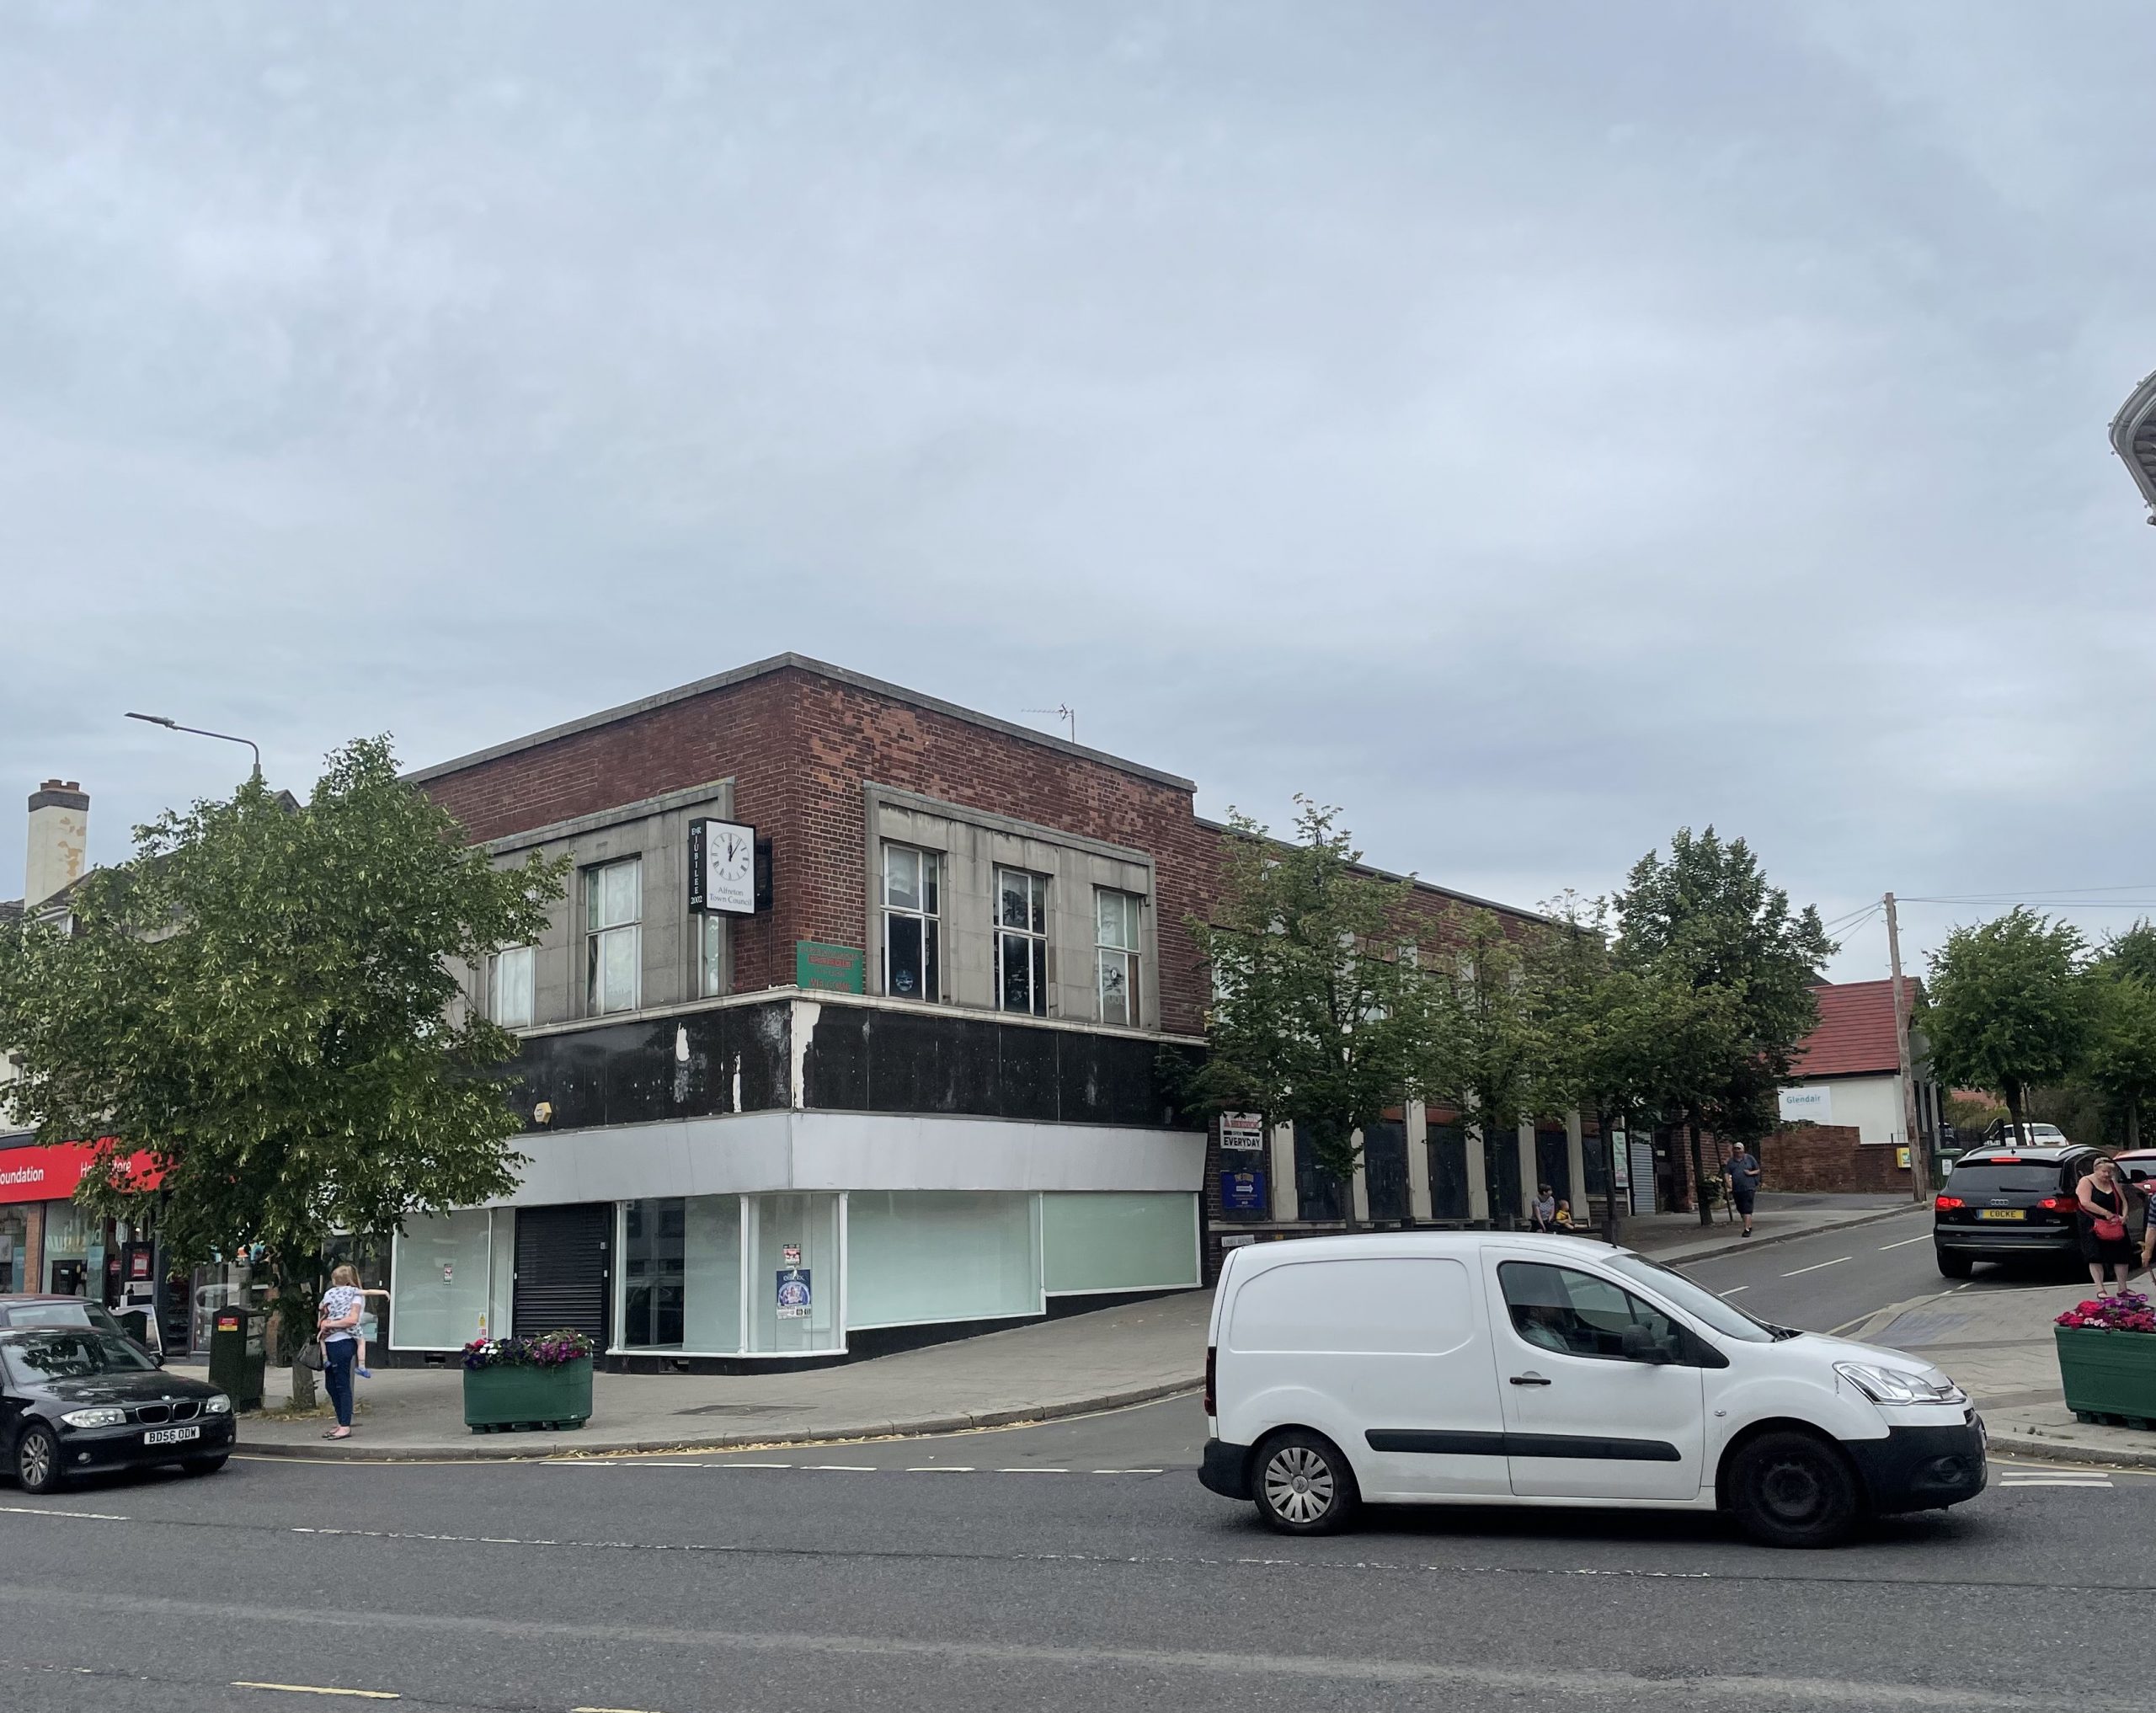 Empty shops on Alfreton High Street